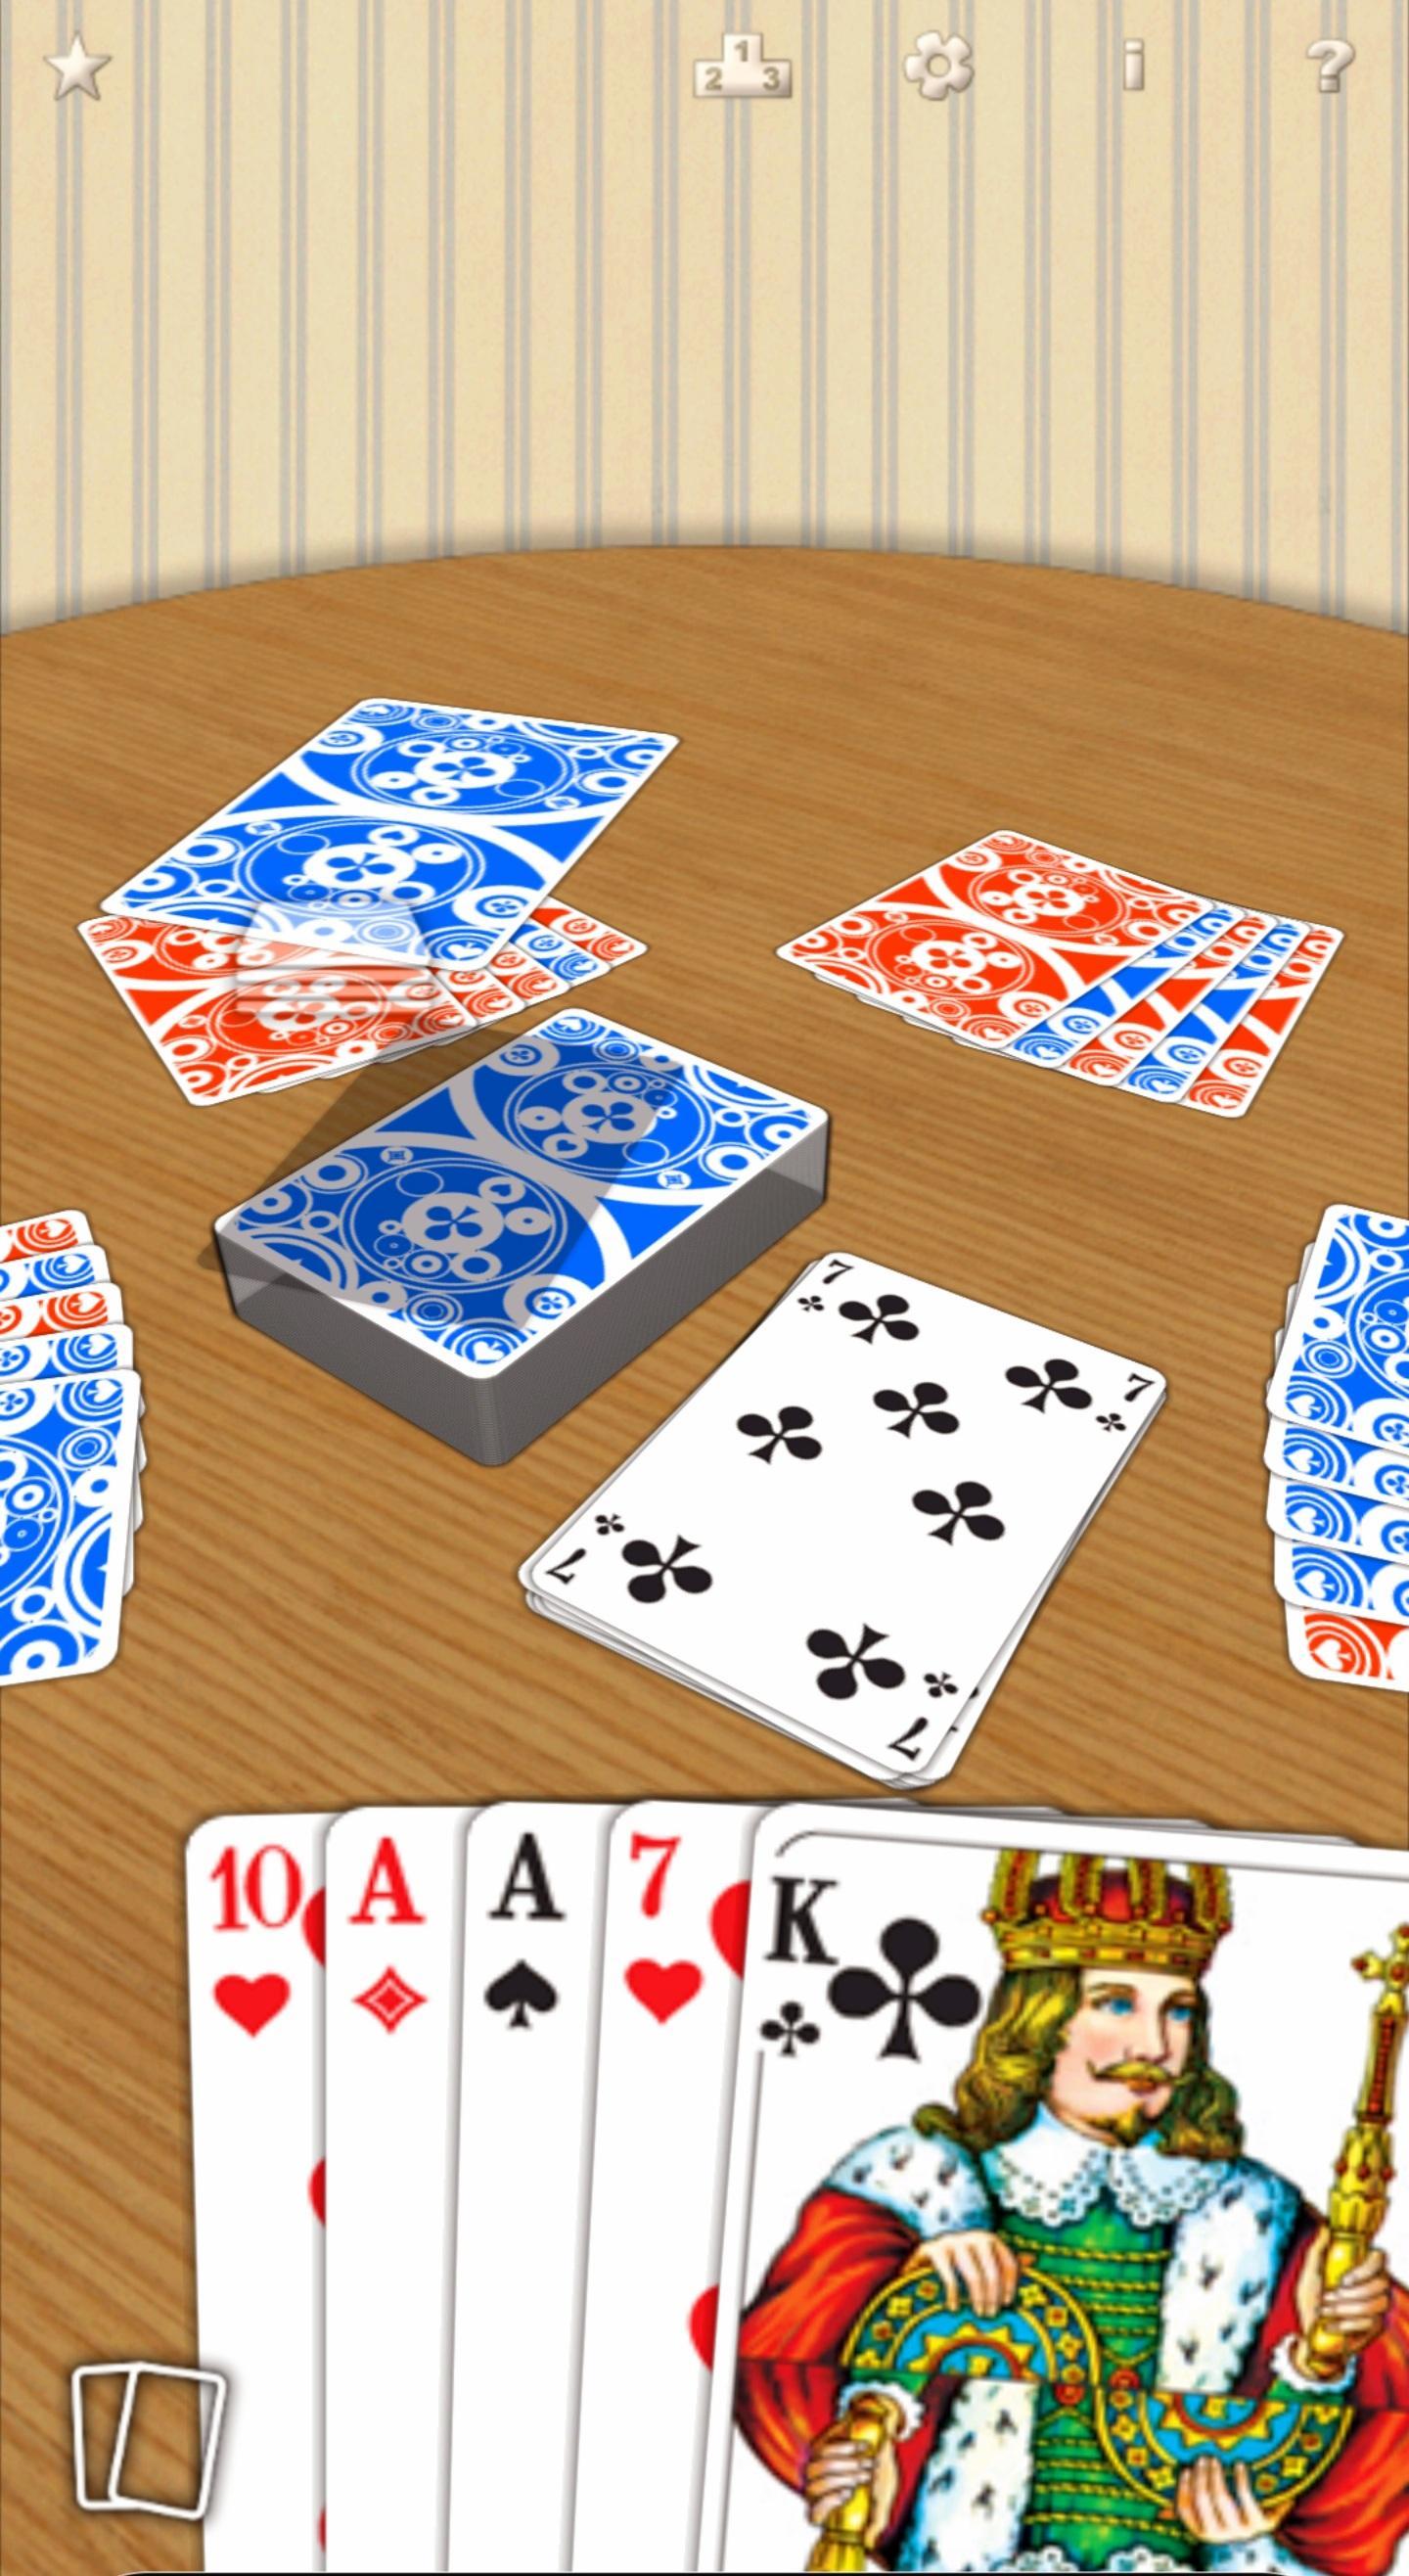 Crazy Eights free card game 1.6.96 Screenshot 14